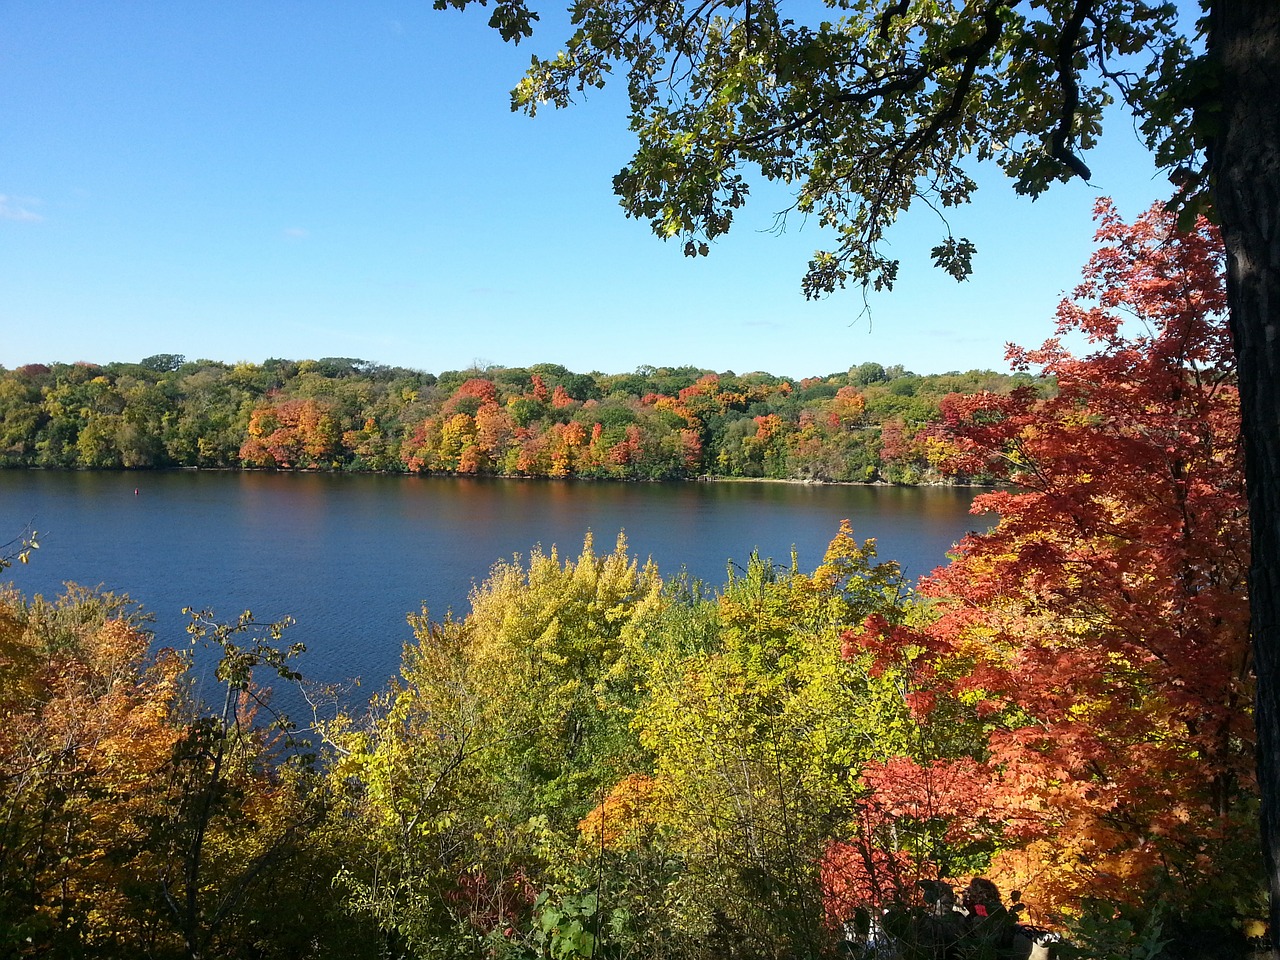 Pretty fall foliage encircling a lake